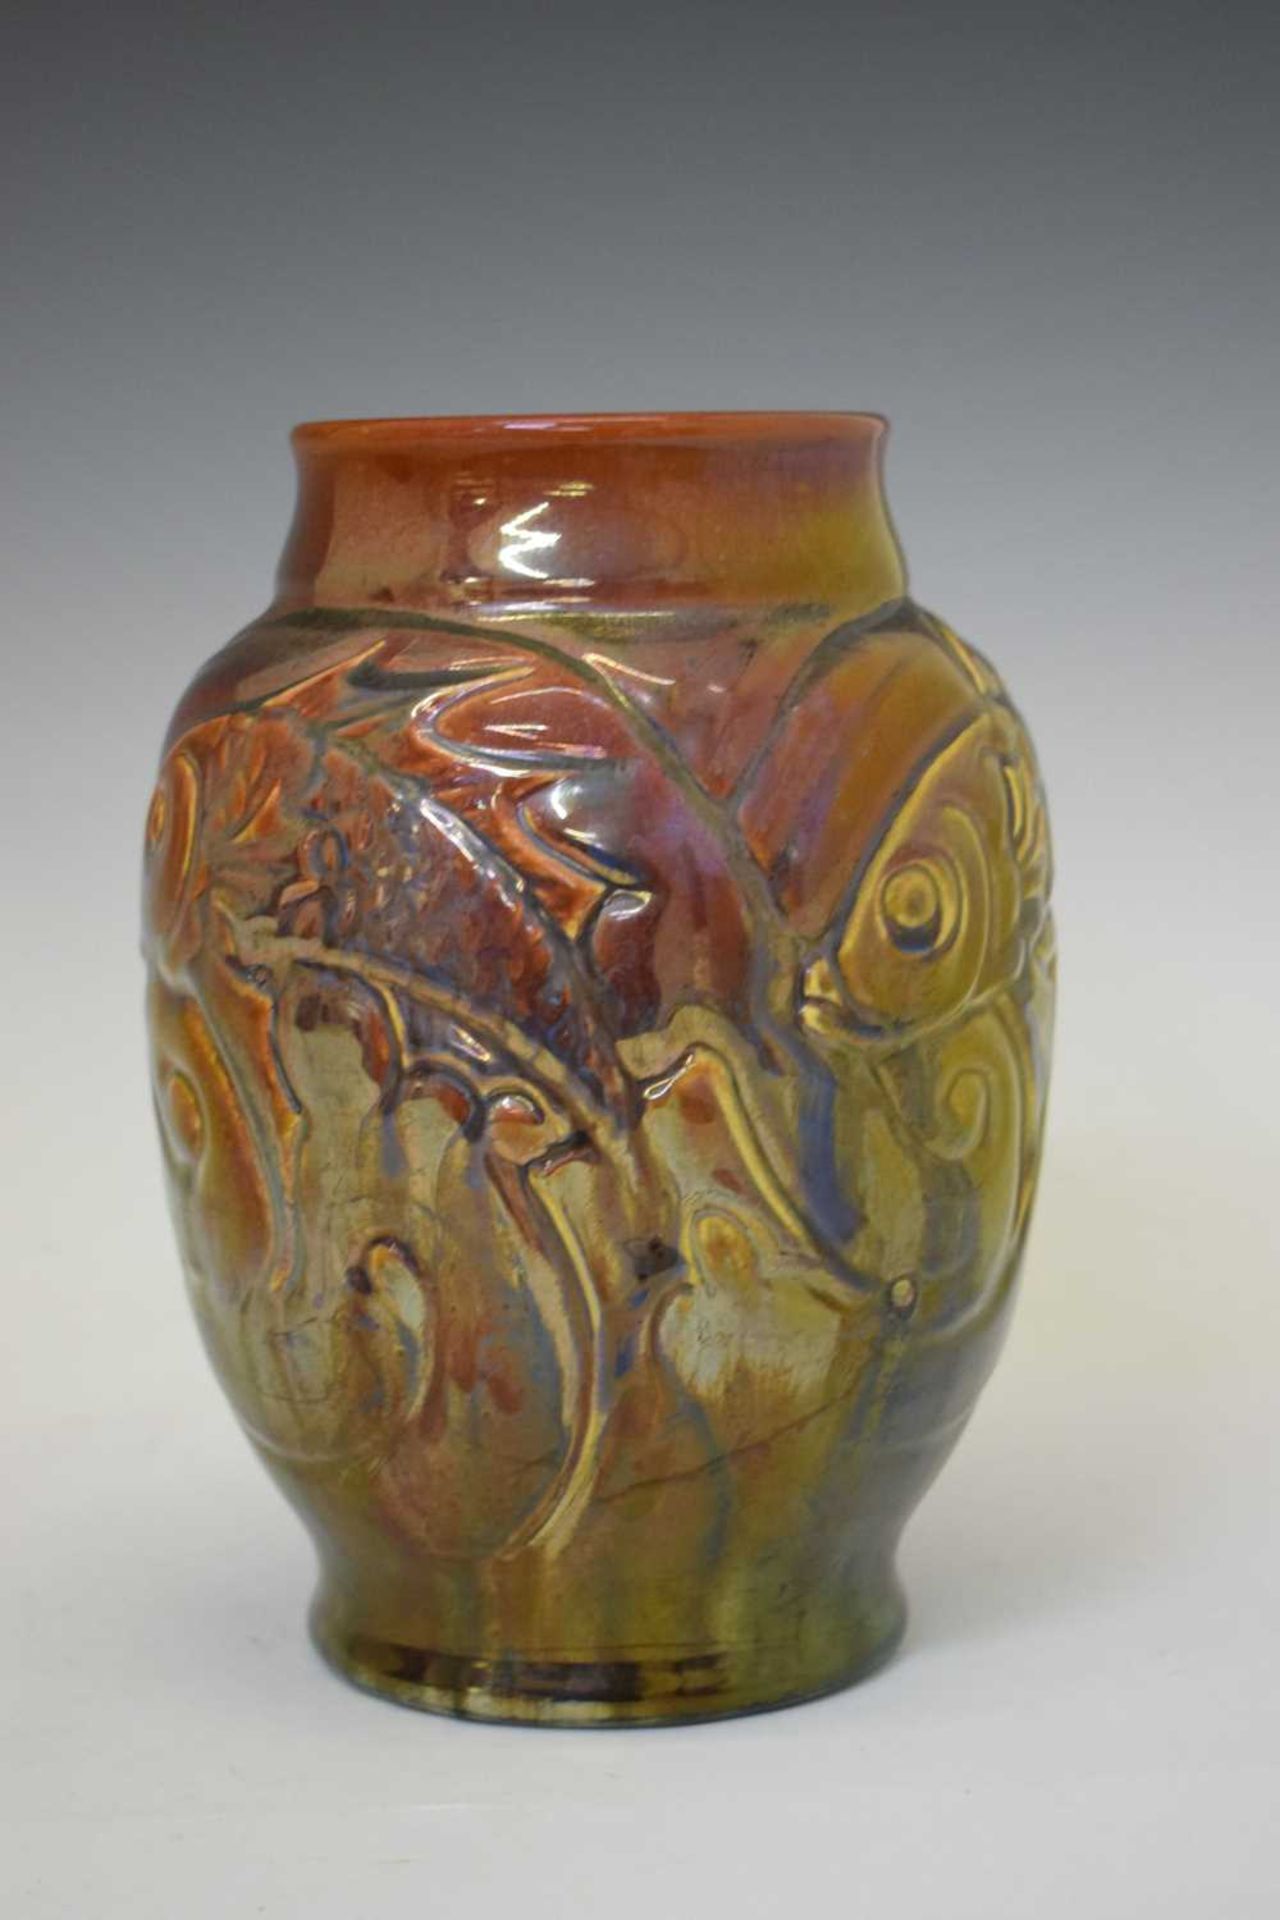 Richard Joyce - Pilkington's Royal Lancastrian - Fish vase - Image 4 of 9